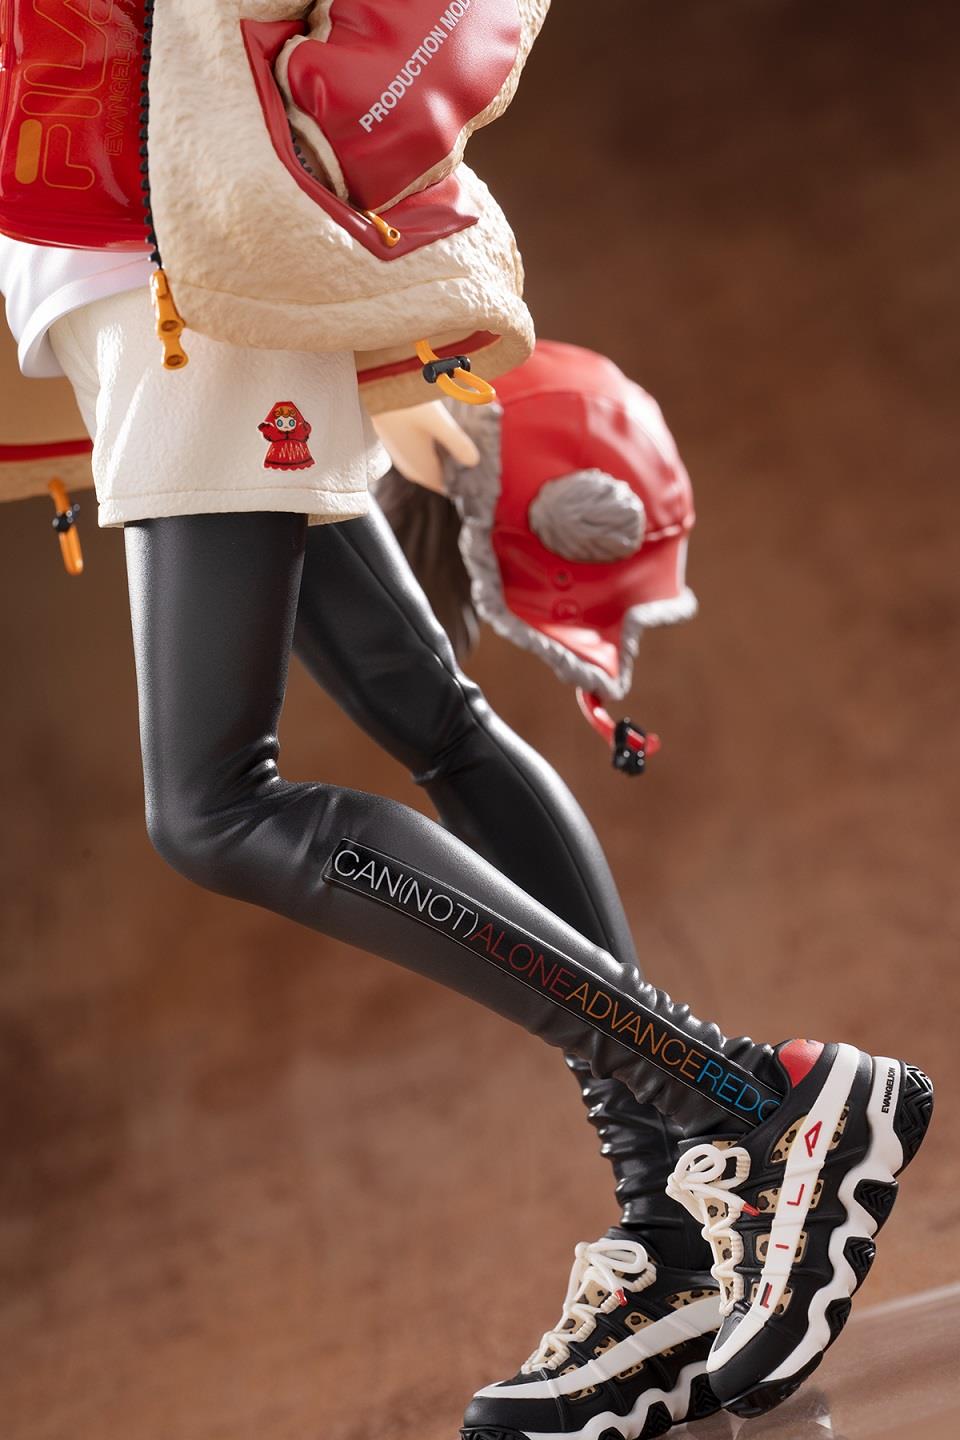 Evangelion: Asuka Langley Radio Eva -Part 2- 1/7 Scale Figurine